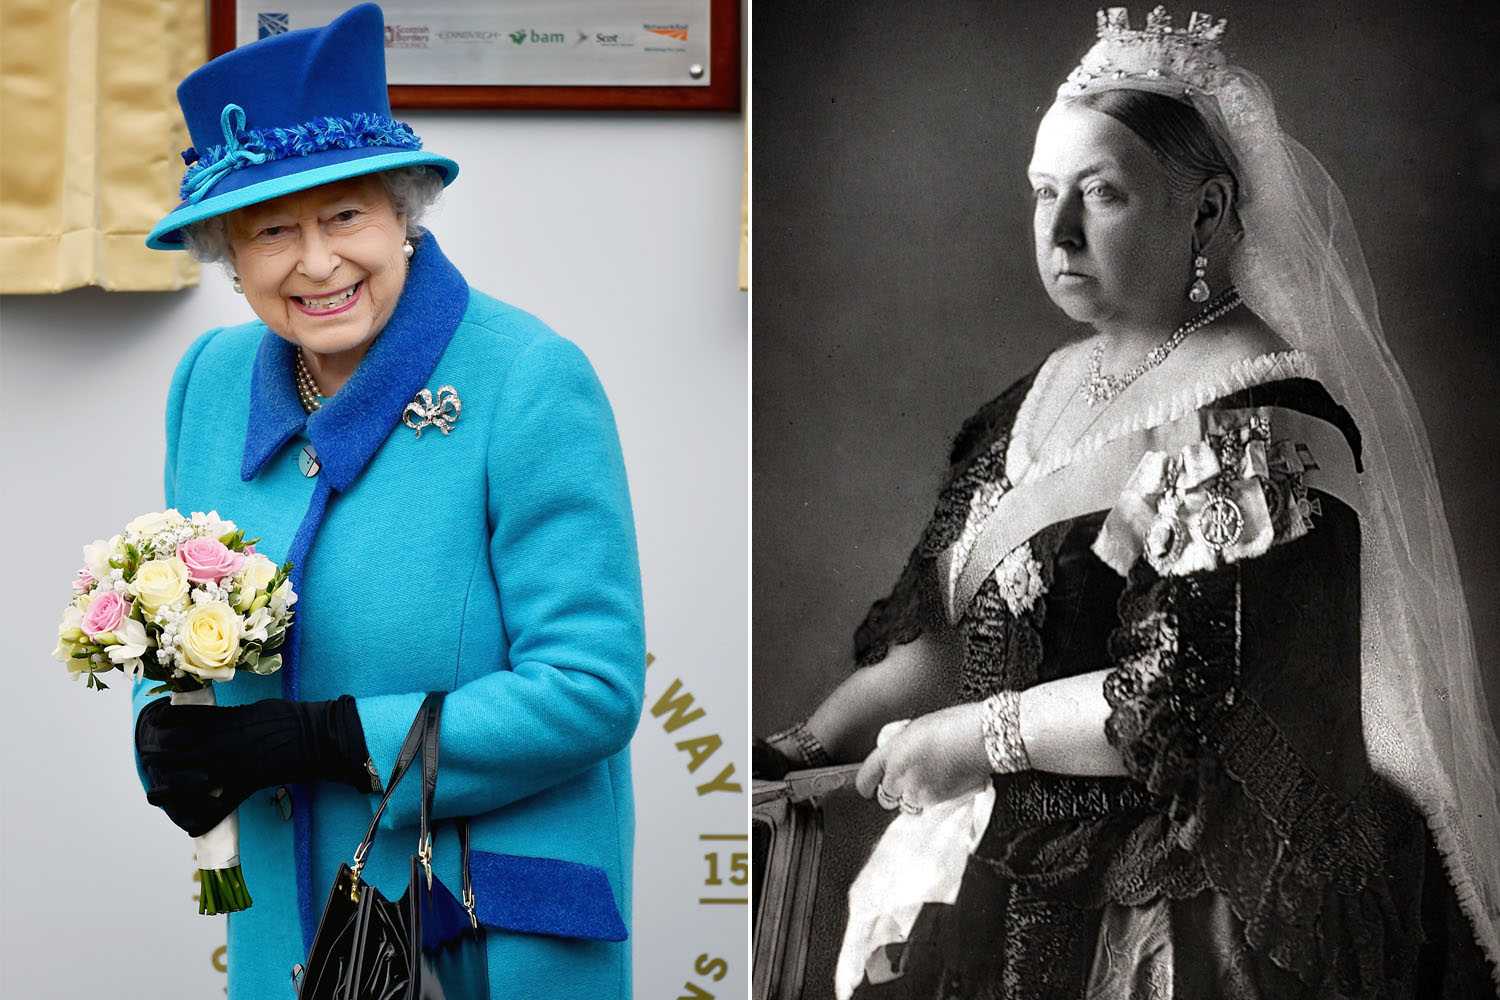 Queen elizabeth ii dies at 96; was britain’s longest-reigning monarch - the new york times